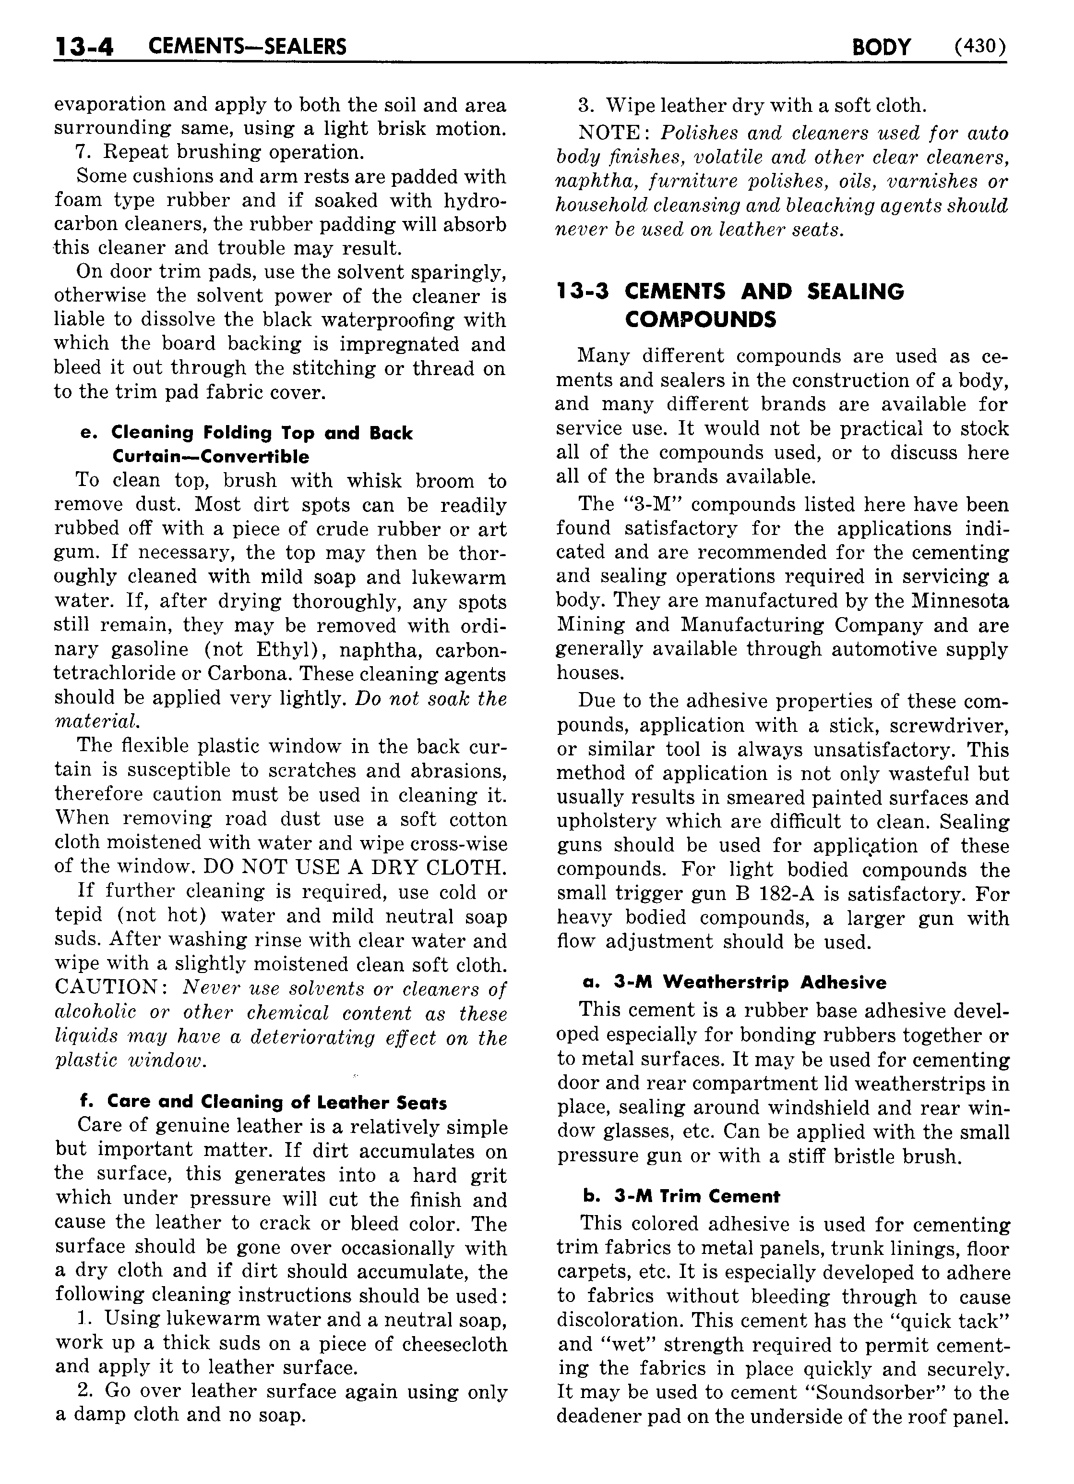 n_14 1951 Buick Shop Manual - Body-004-004.jpg